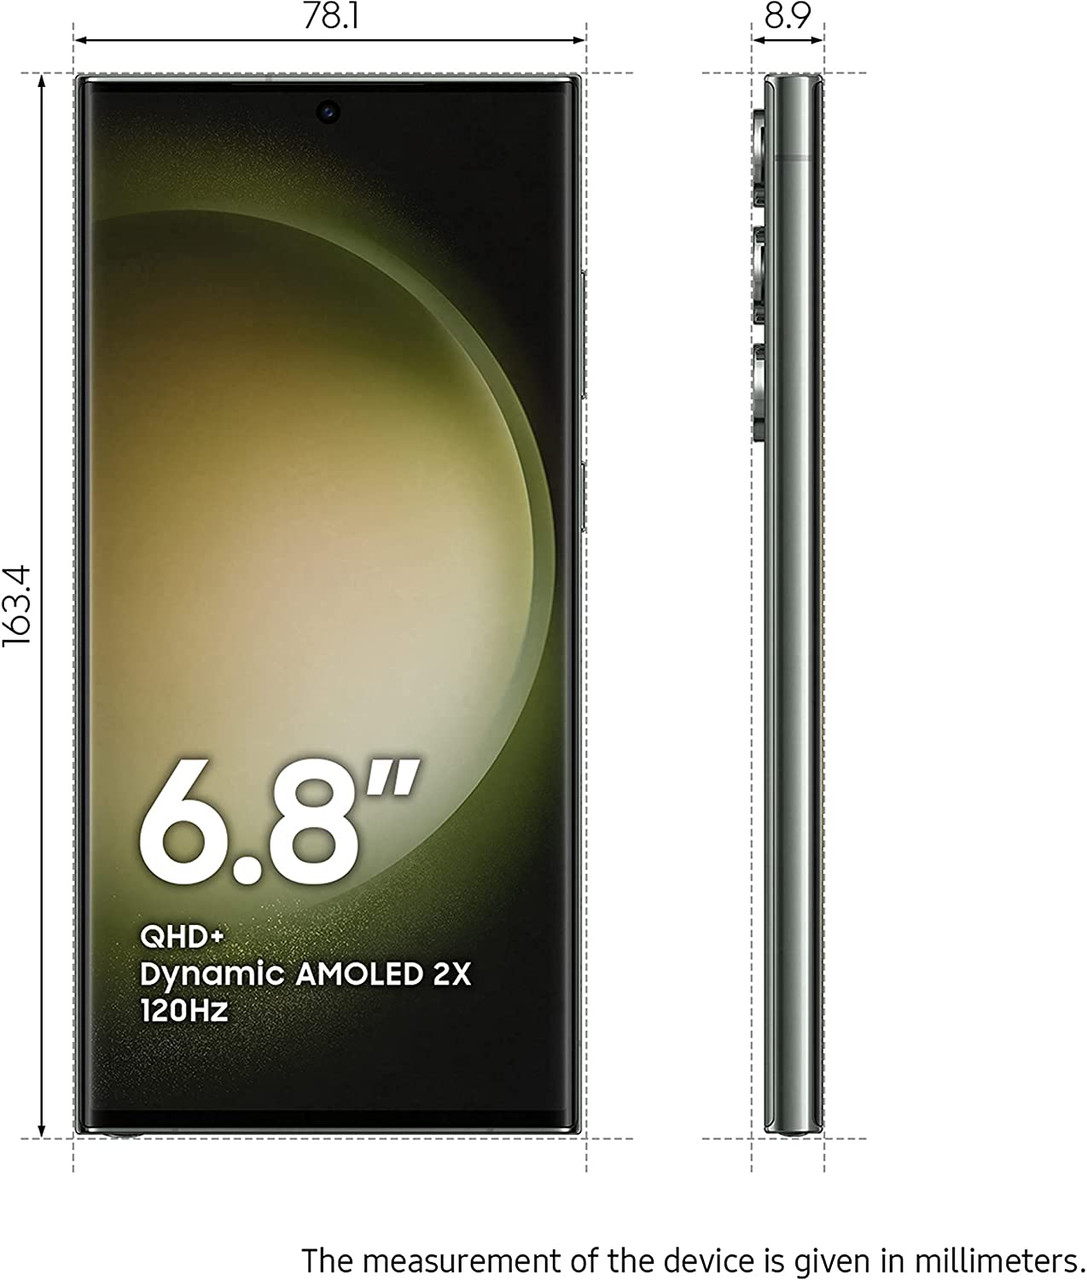 Samsung Galaxy S23 Ultra, 8 GB, 256 GB, Dual-SIM, green